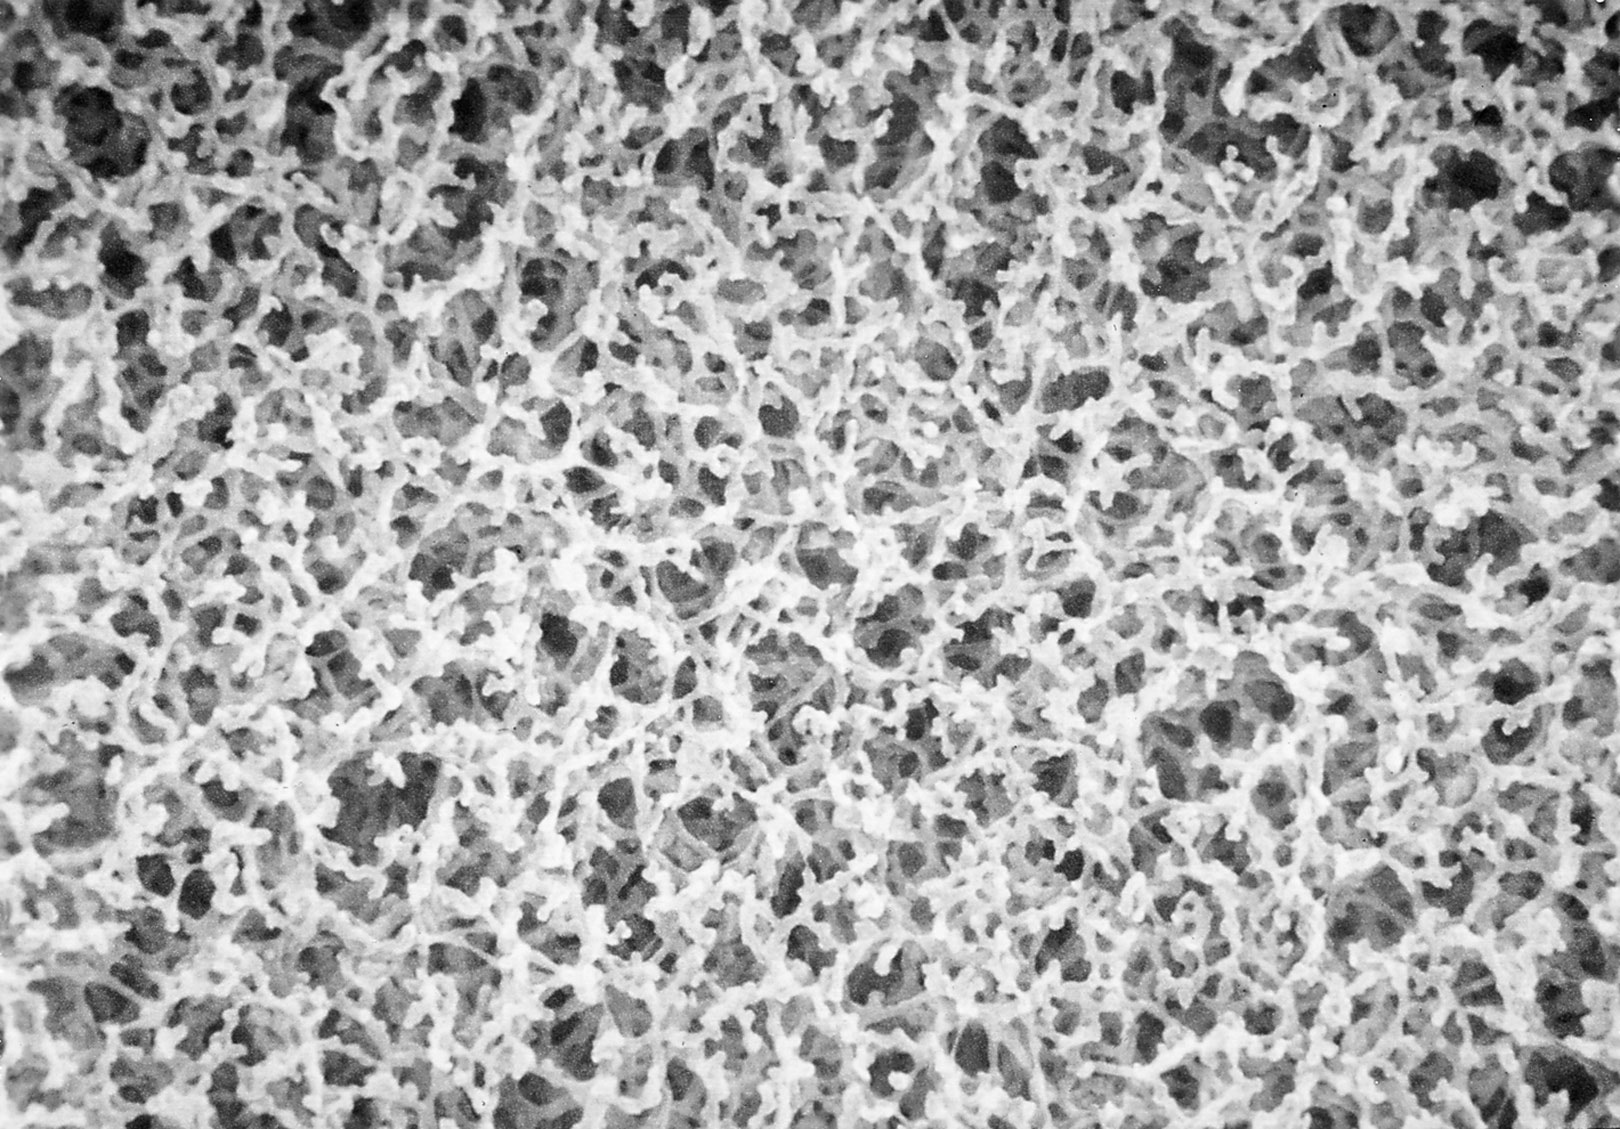 Membrana de ésteres mezclados de nitrocelulosa. GVS. Material: ME. Ø (mm): 47. Tamaño poro (µm): 5. Estéril: No. Cuadrícula: No. Color: Blanca